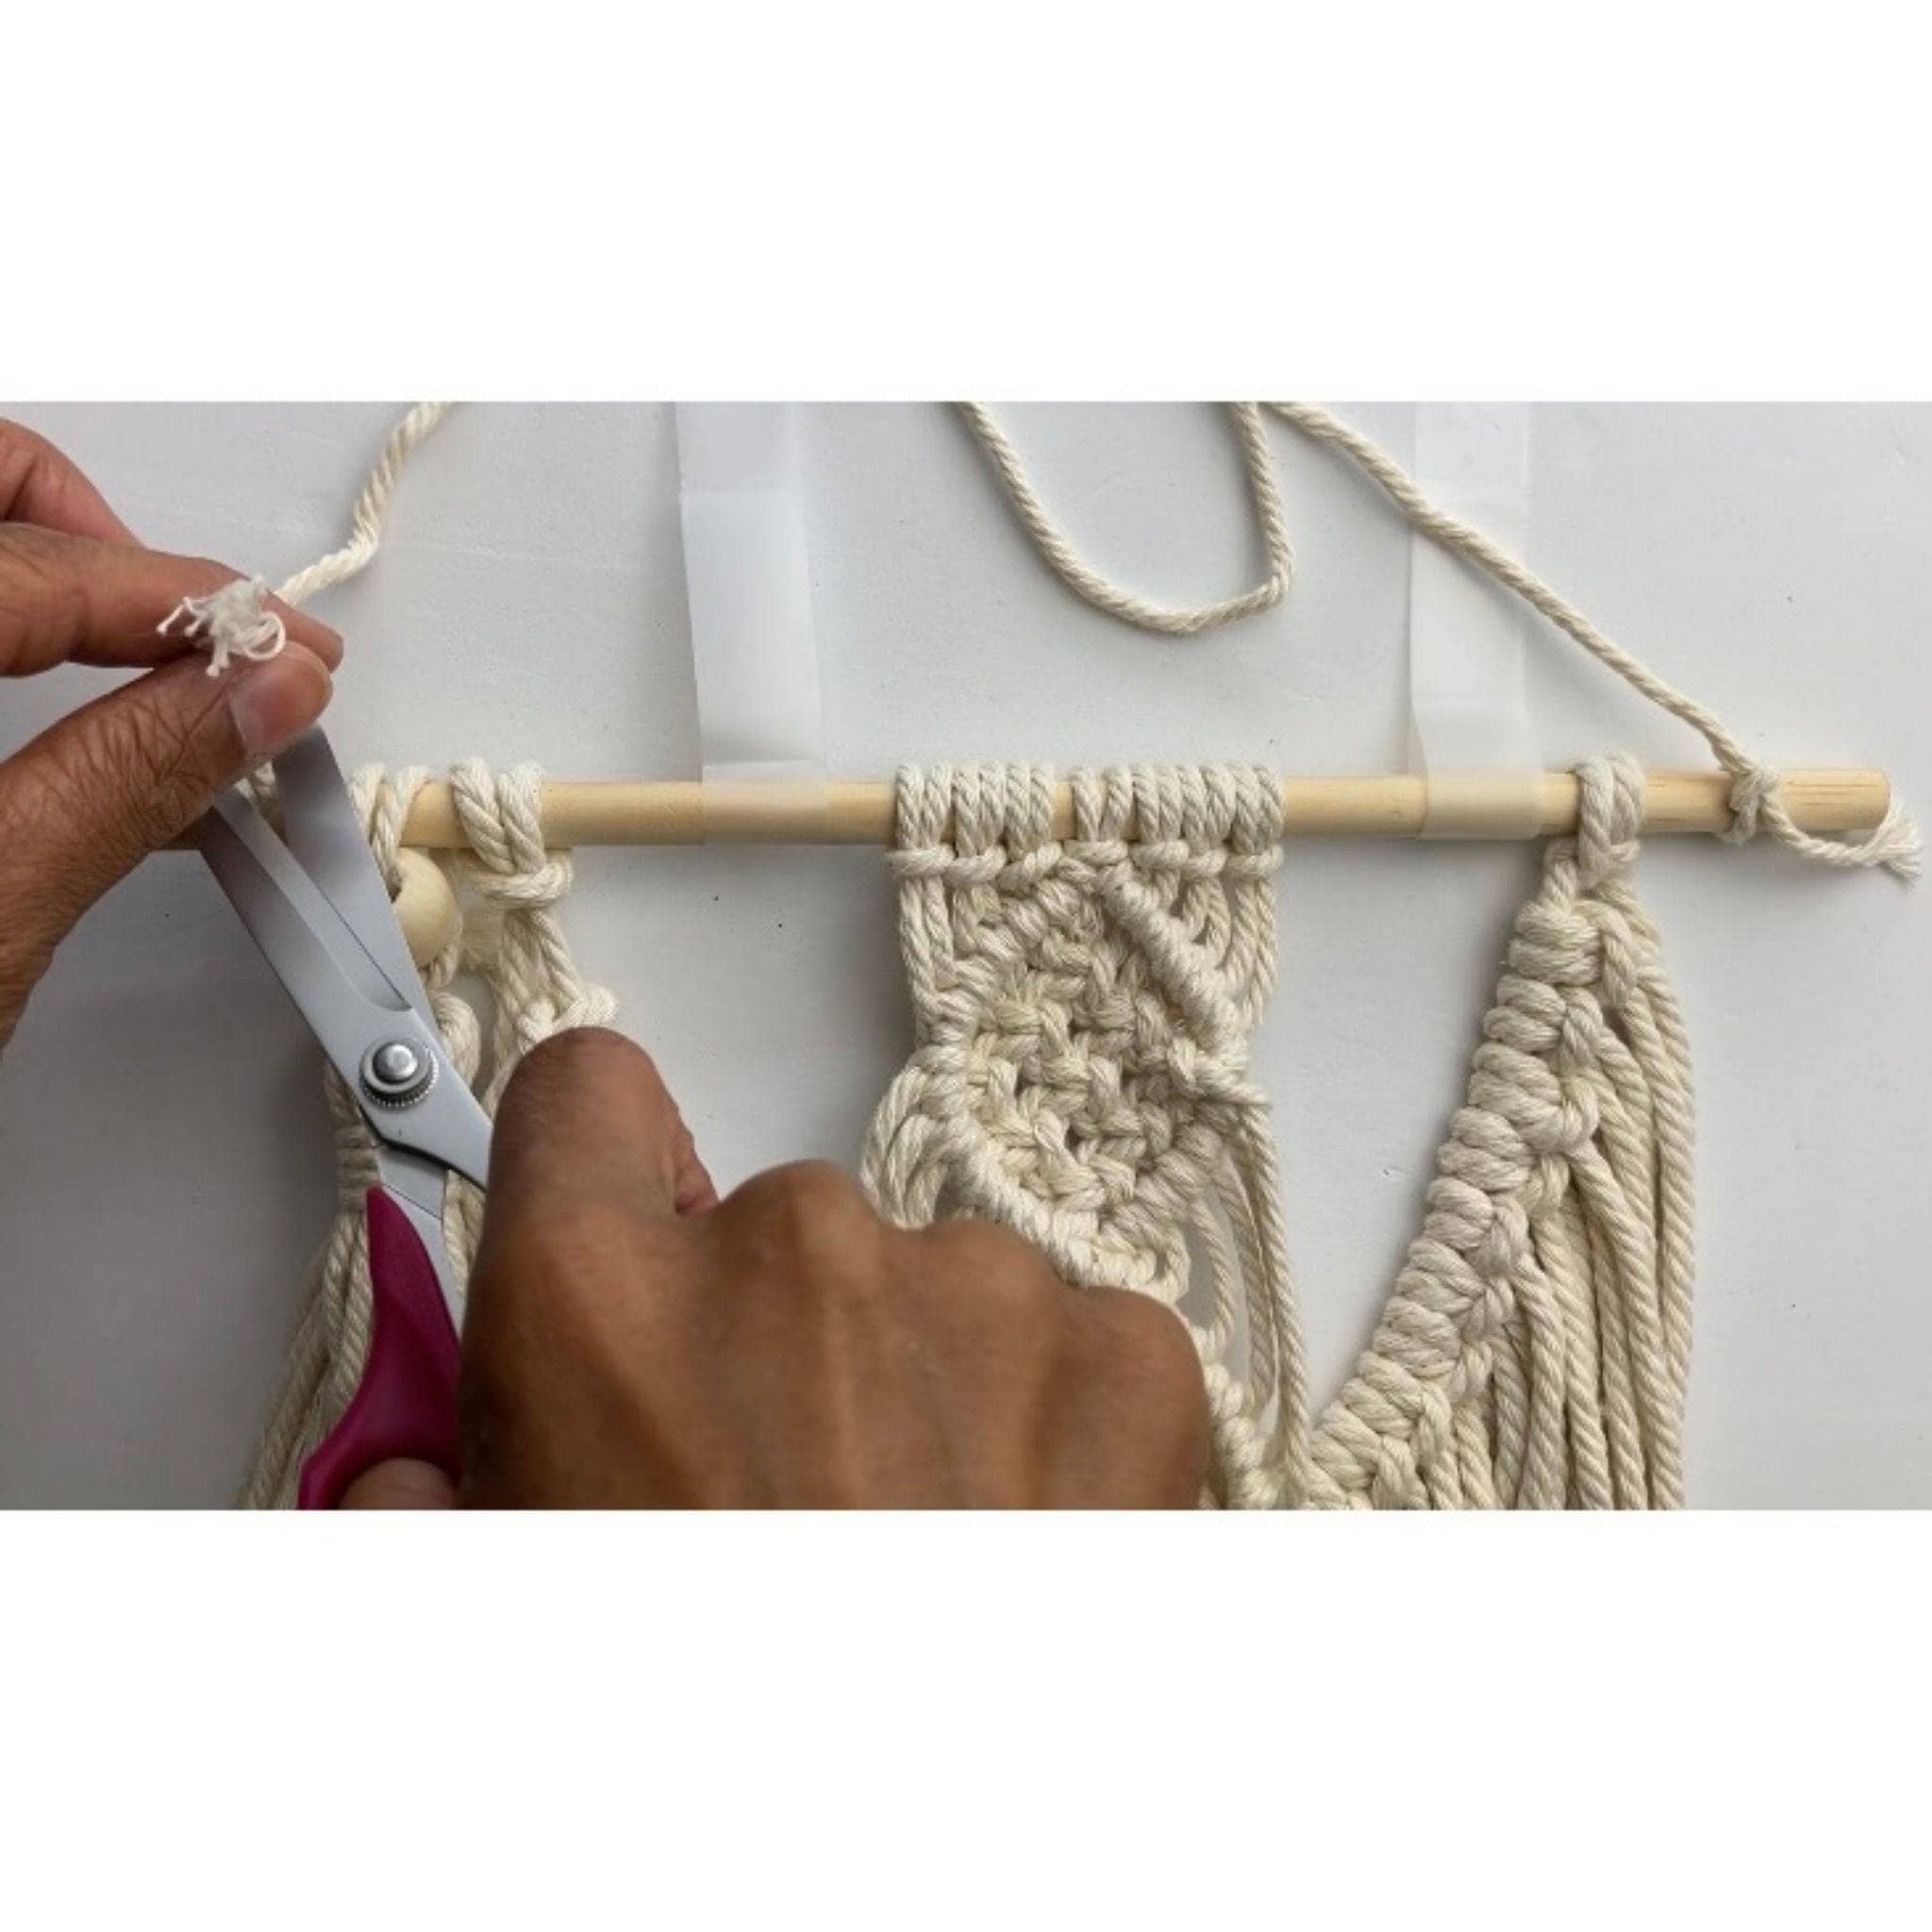 The Tranquil Wall Hanging Macrame Kit From DMC - Knitting and Crocheting  Kits - Kits - Casa Cenina